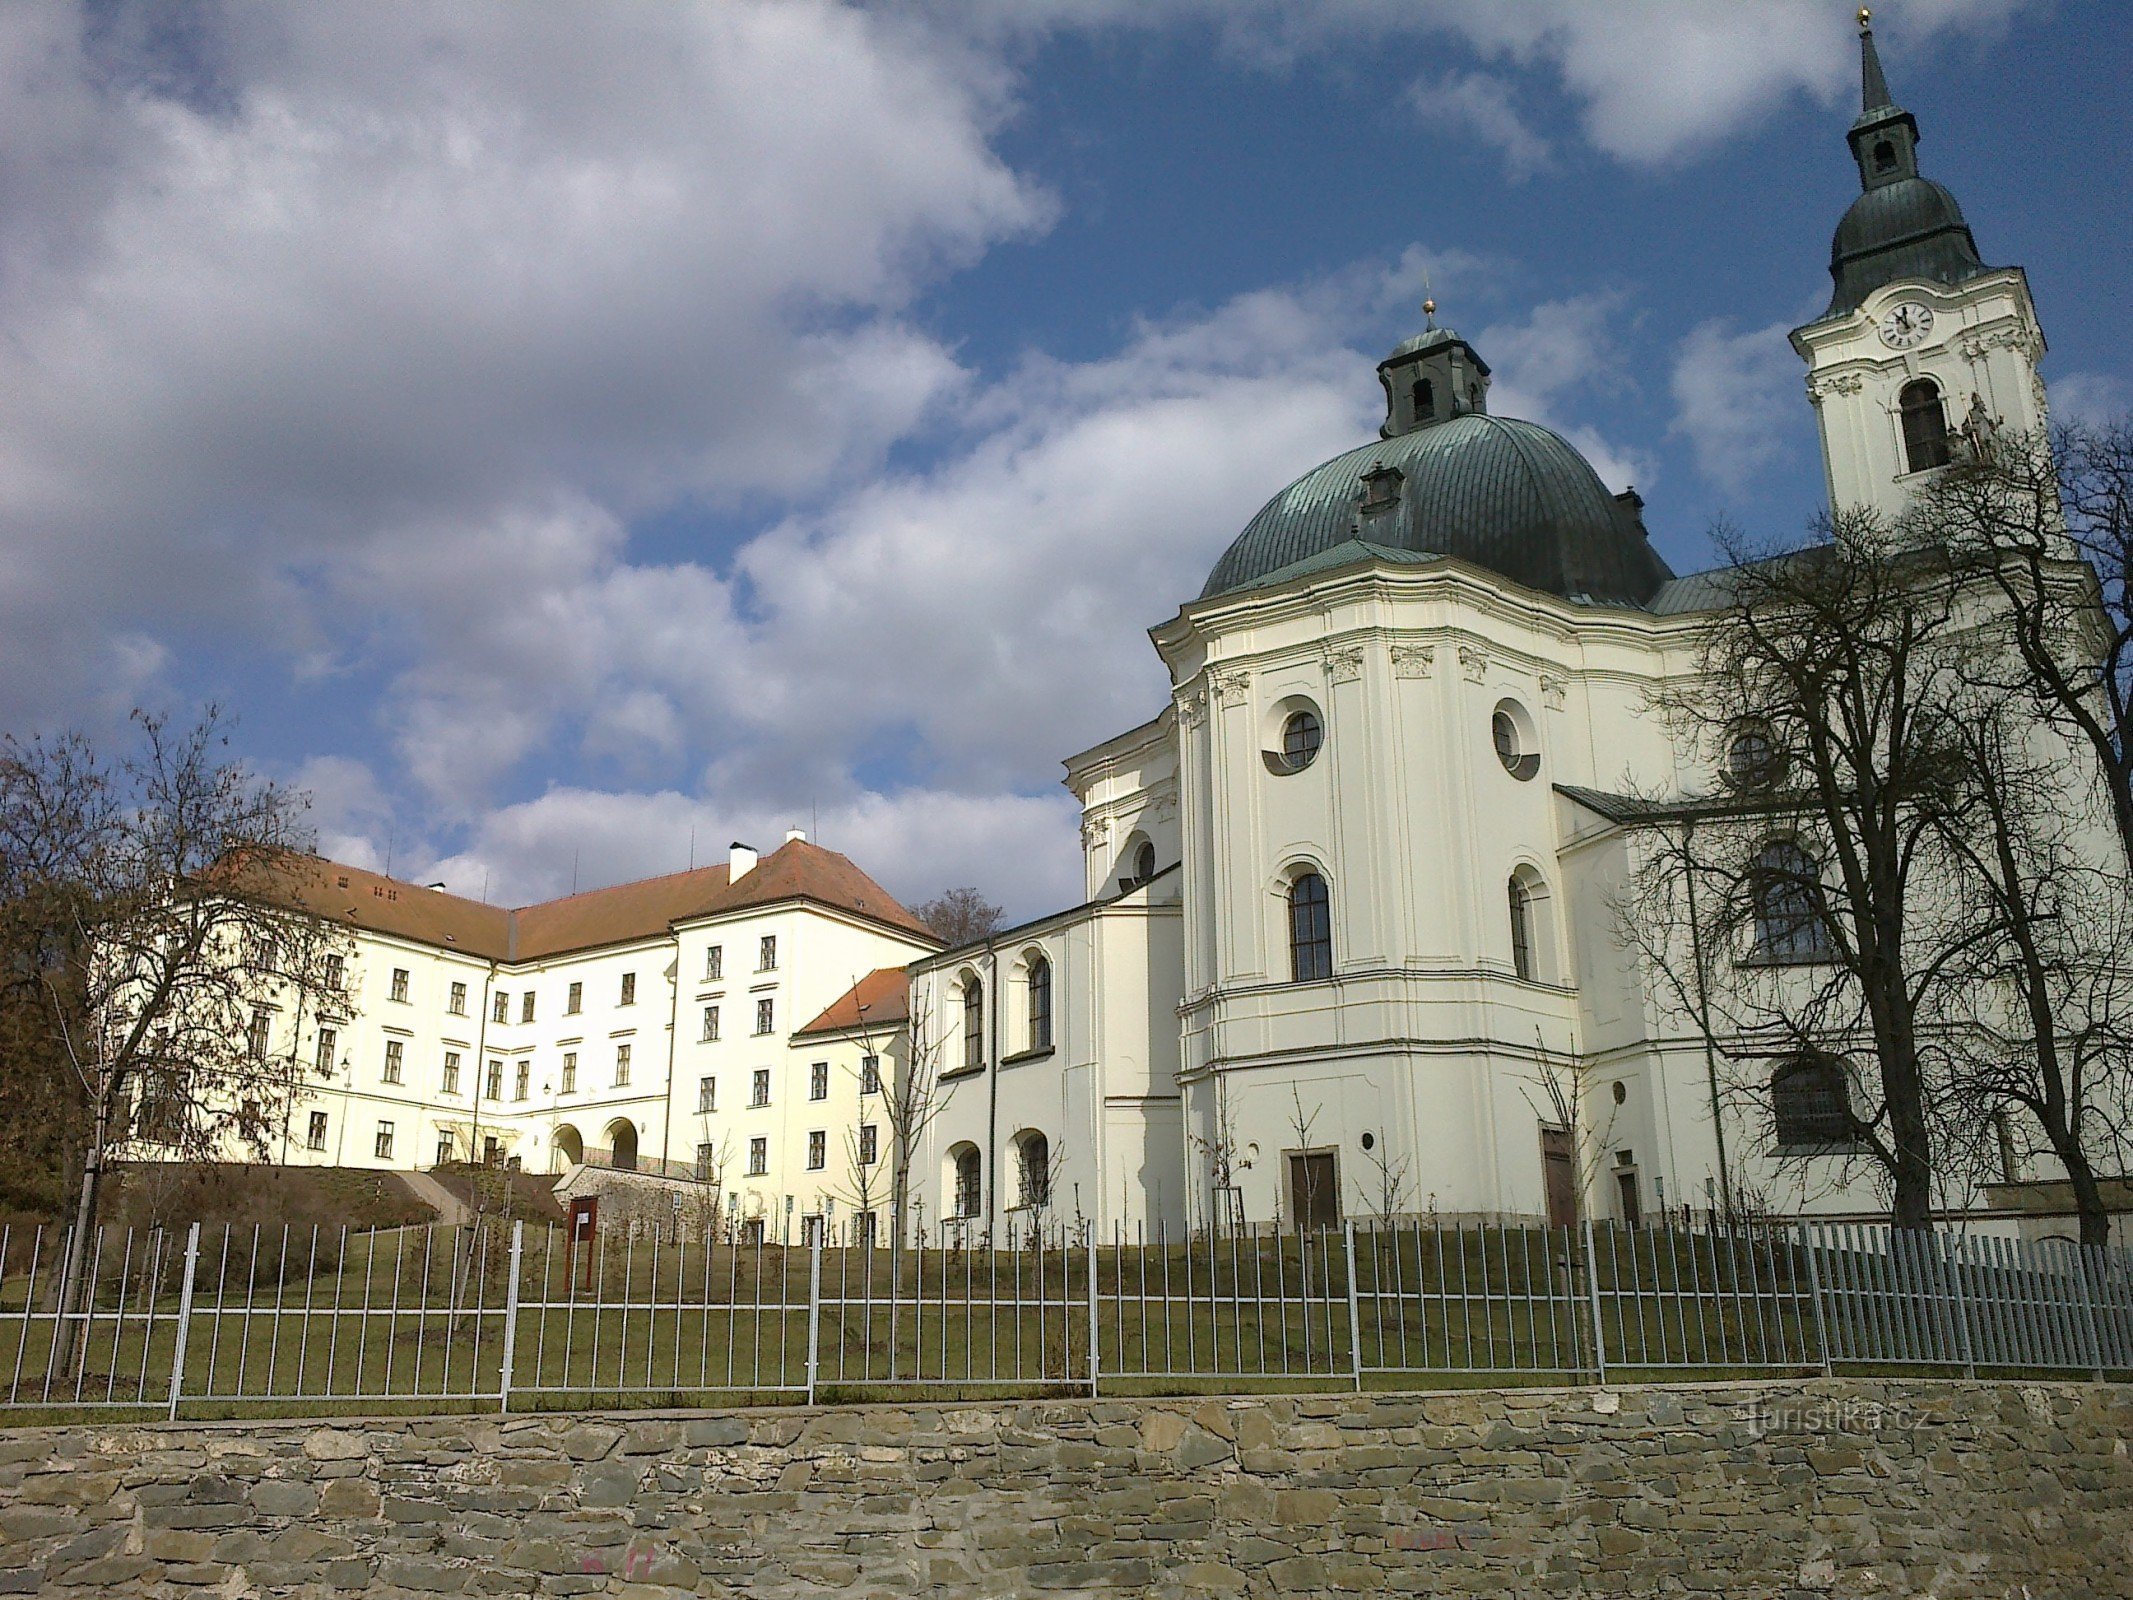 iglesia bautista y castillo